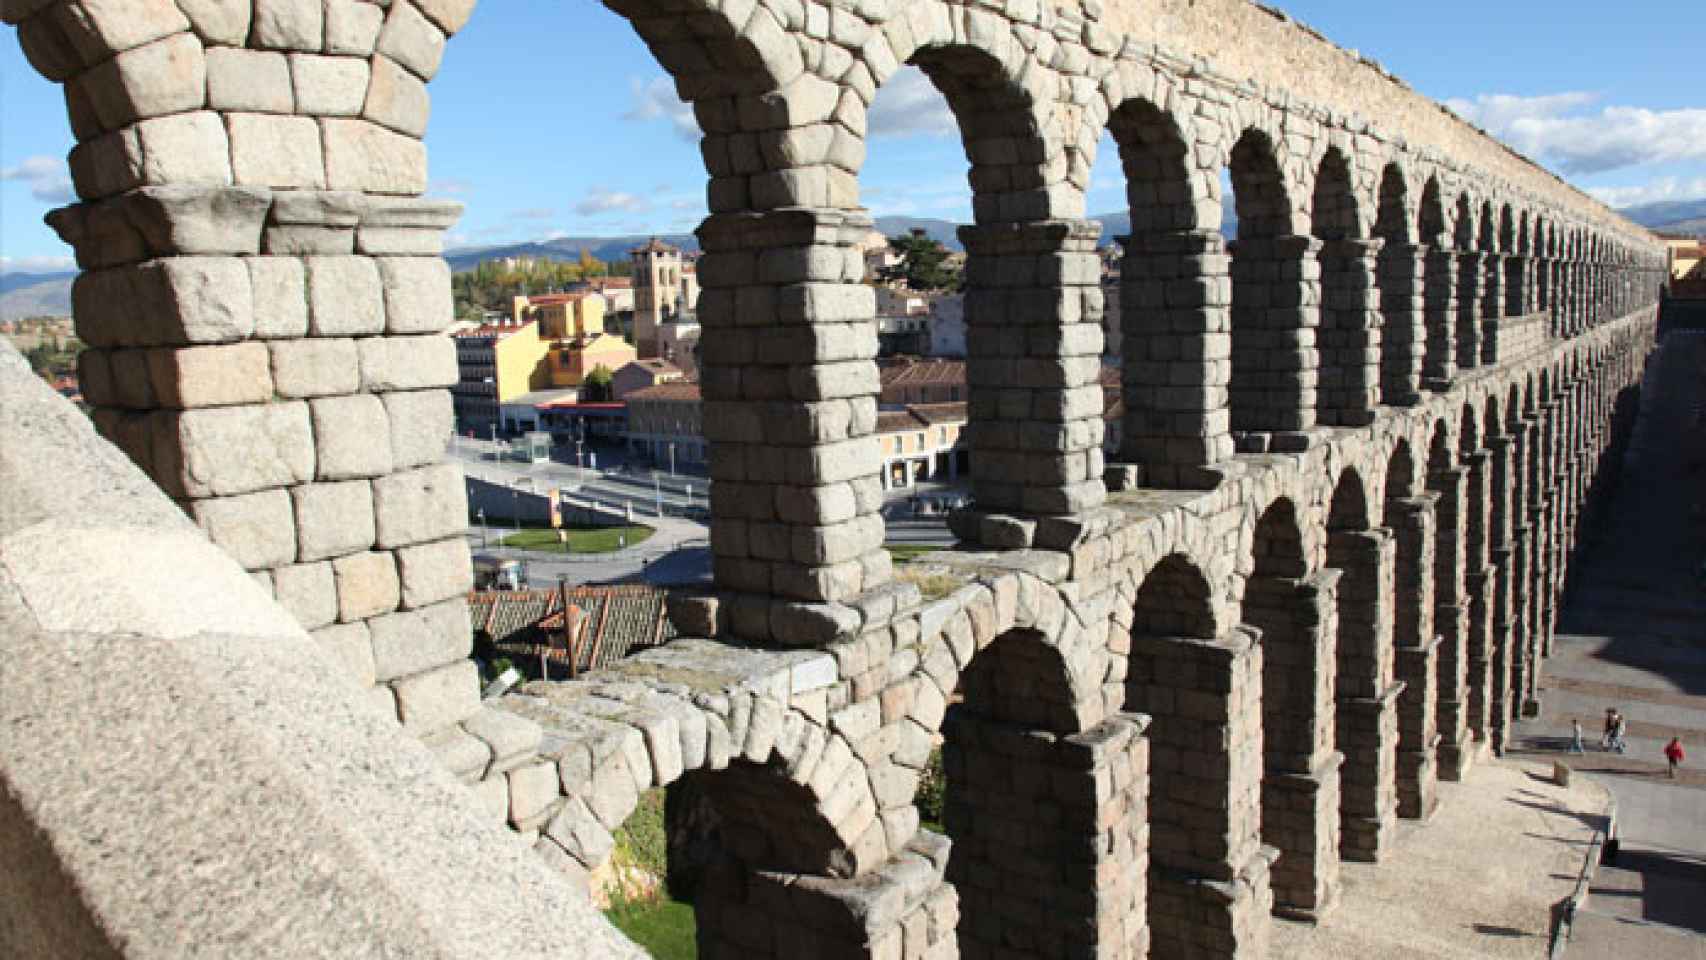 Acueducto-de-Segovia